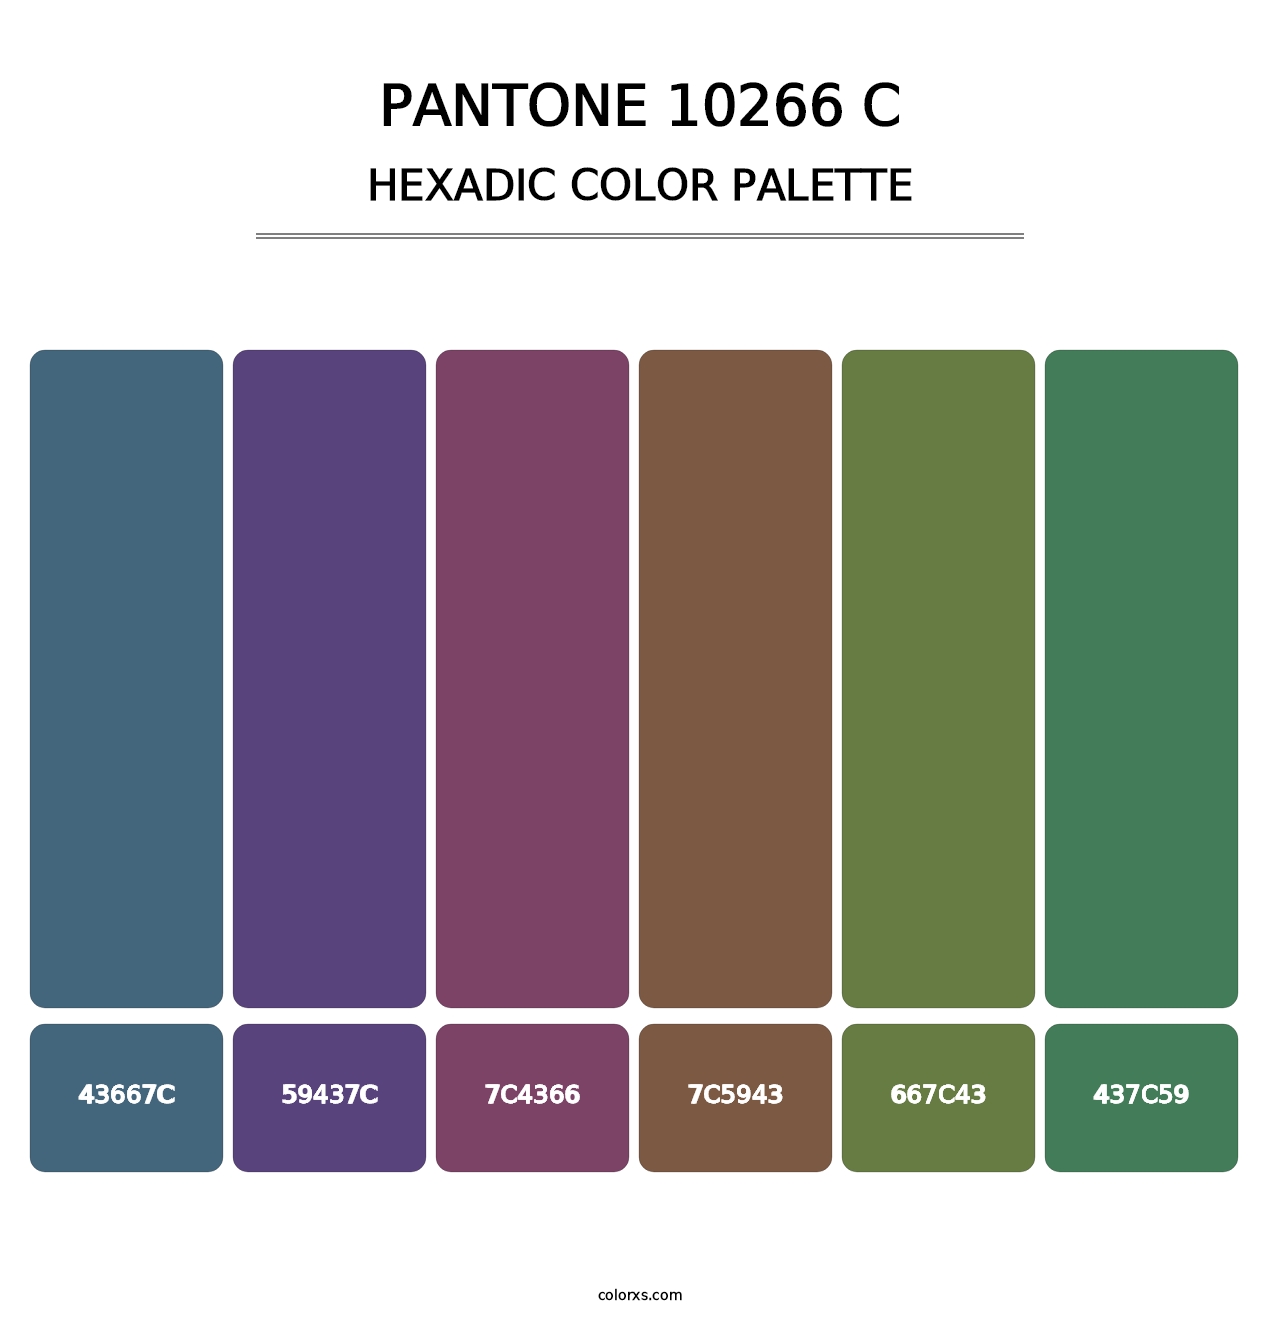 PANTONE 10266 C - Hexadic Color Palette